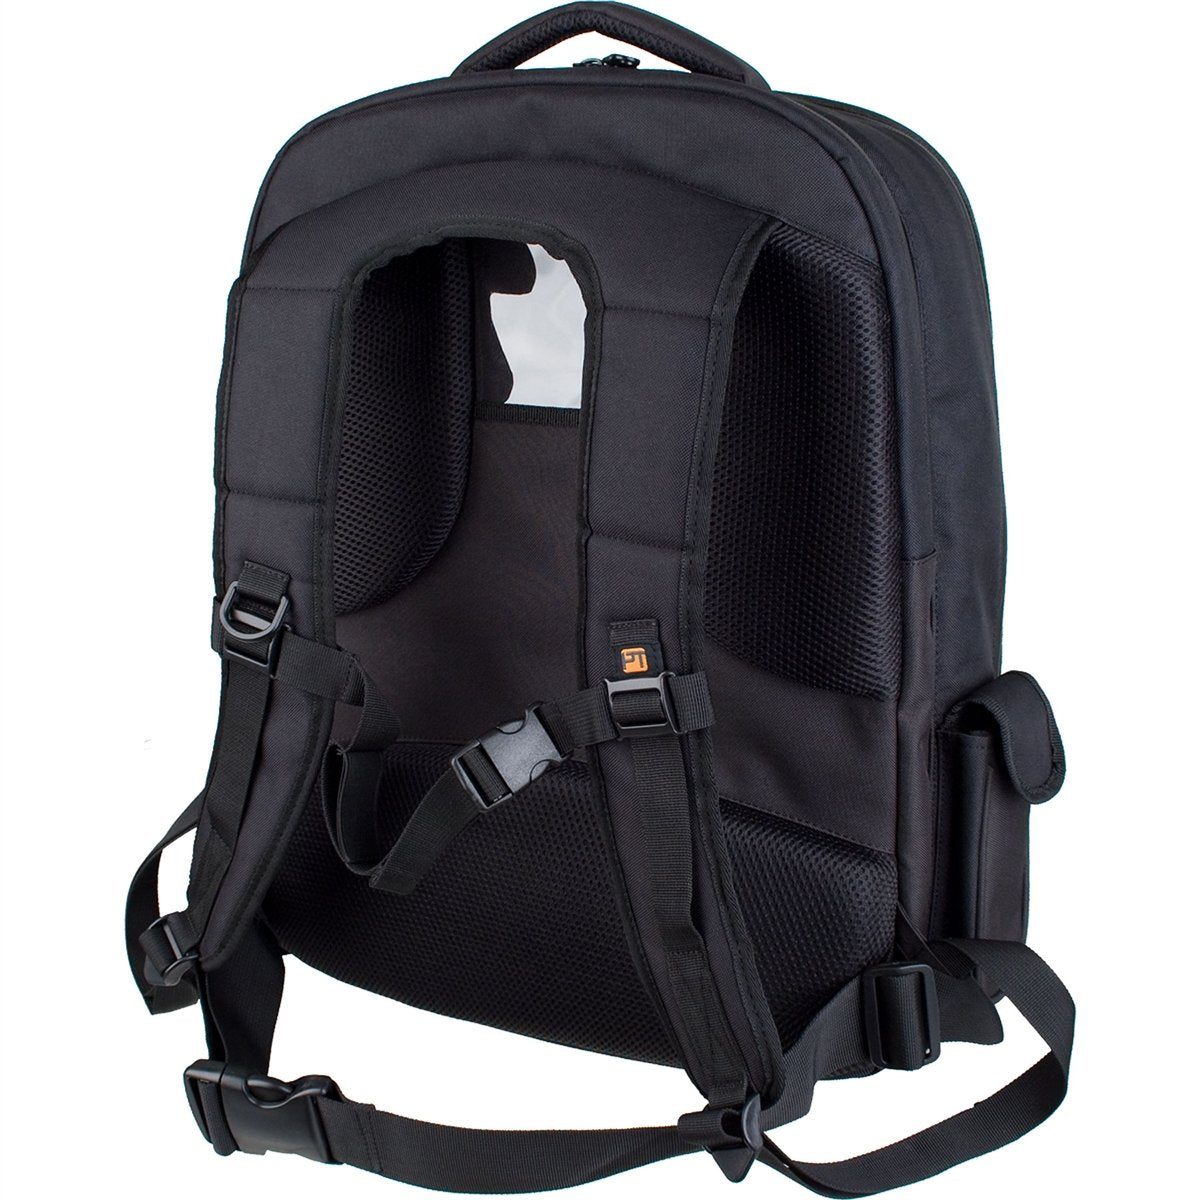 Protec Backpack Strap